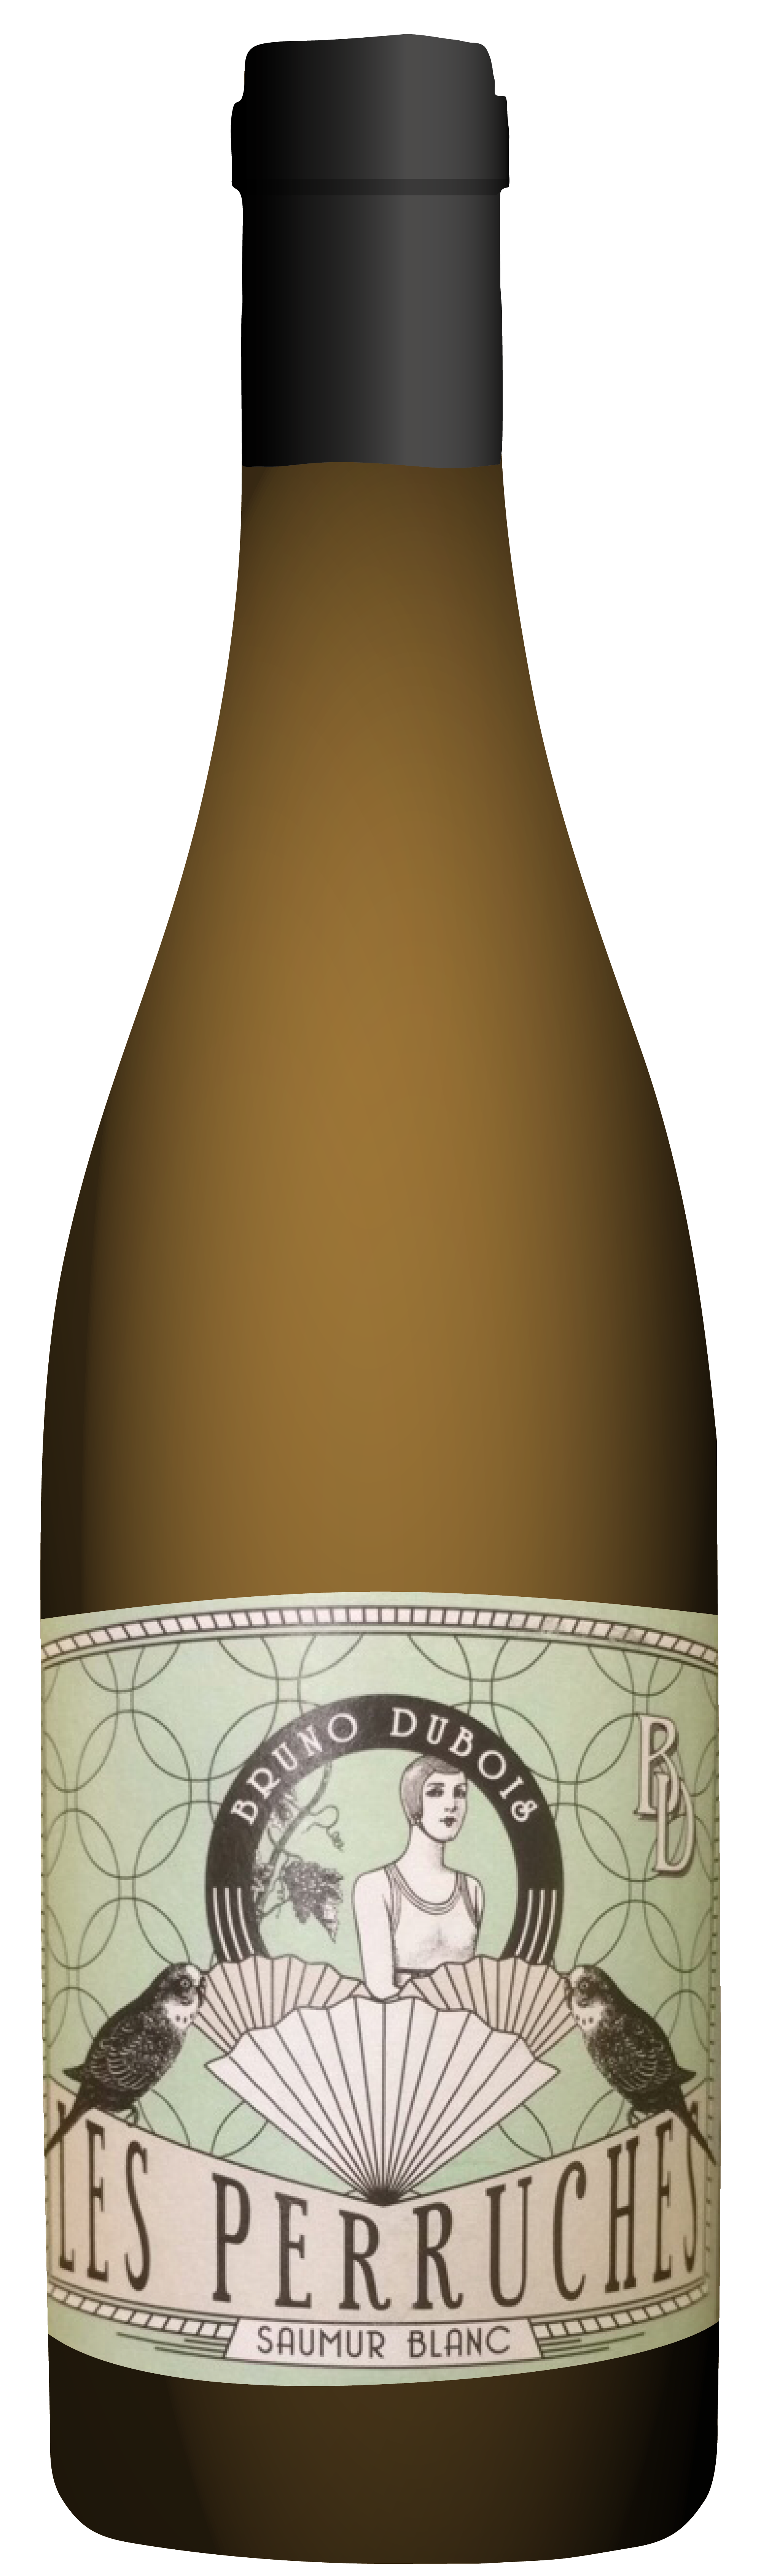 the natural wine company club november 2020 france bruno dubois les perruches